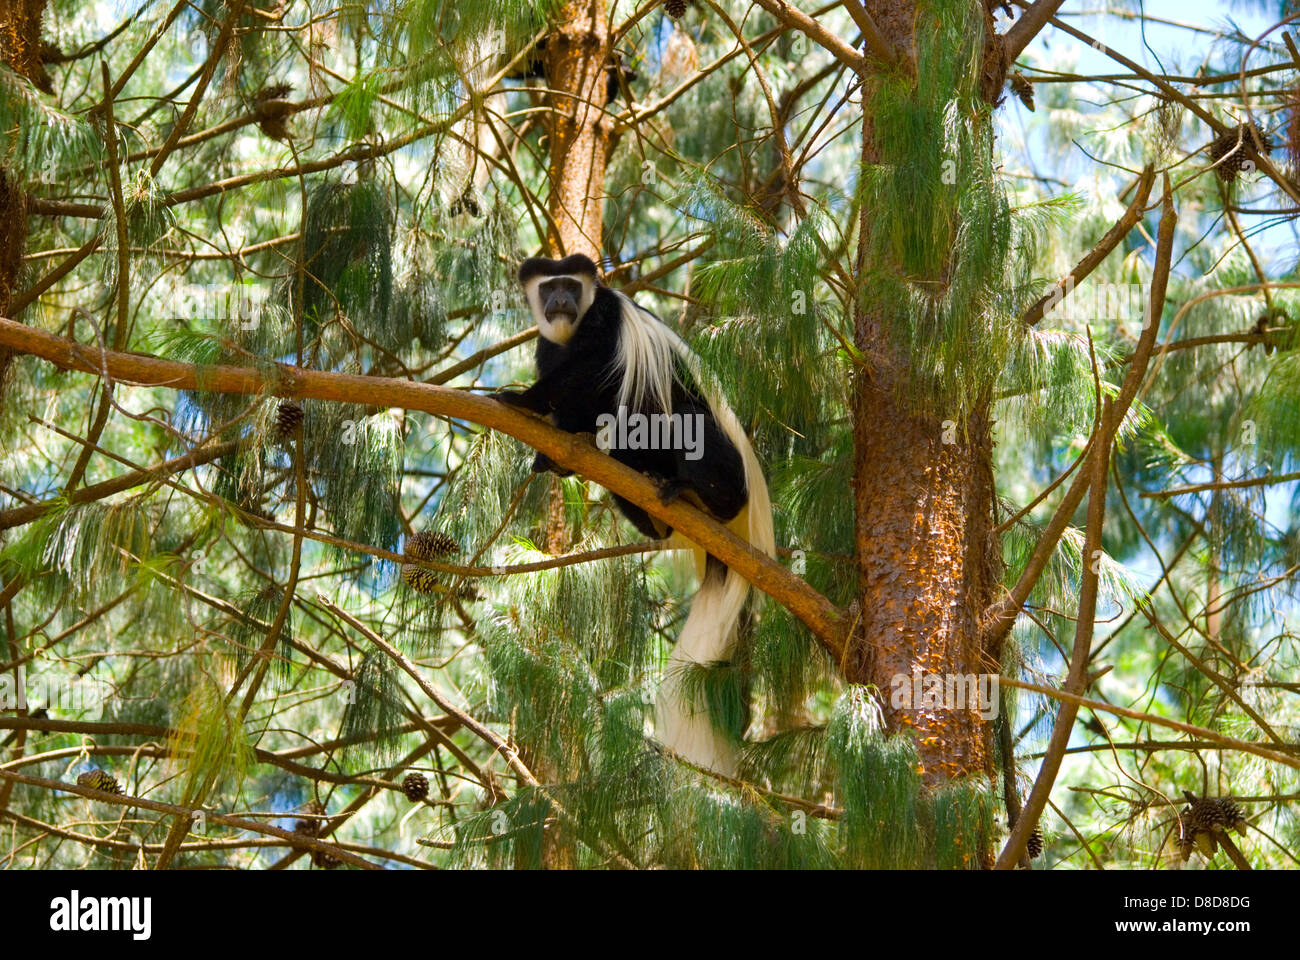 Black and white colobus monkey in pine wood foliage Stock Photo